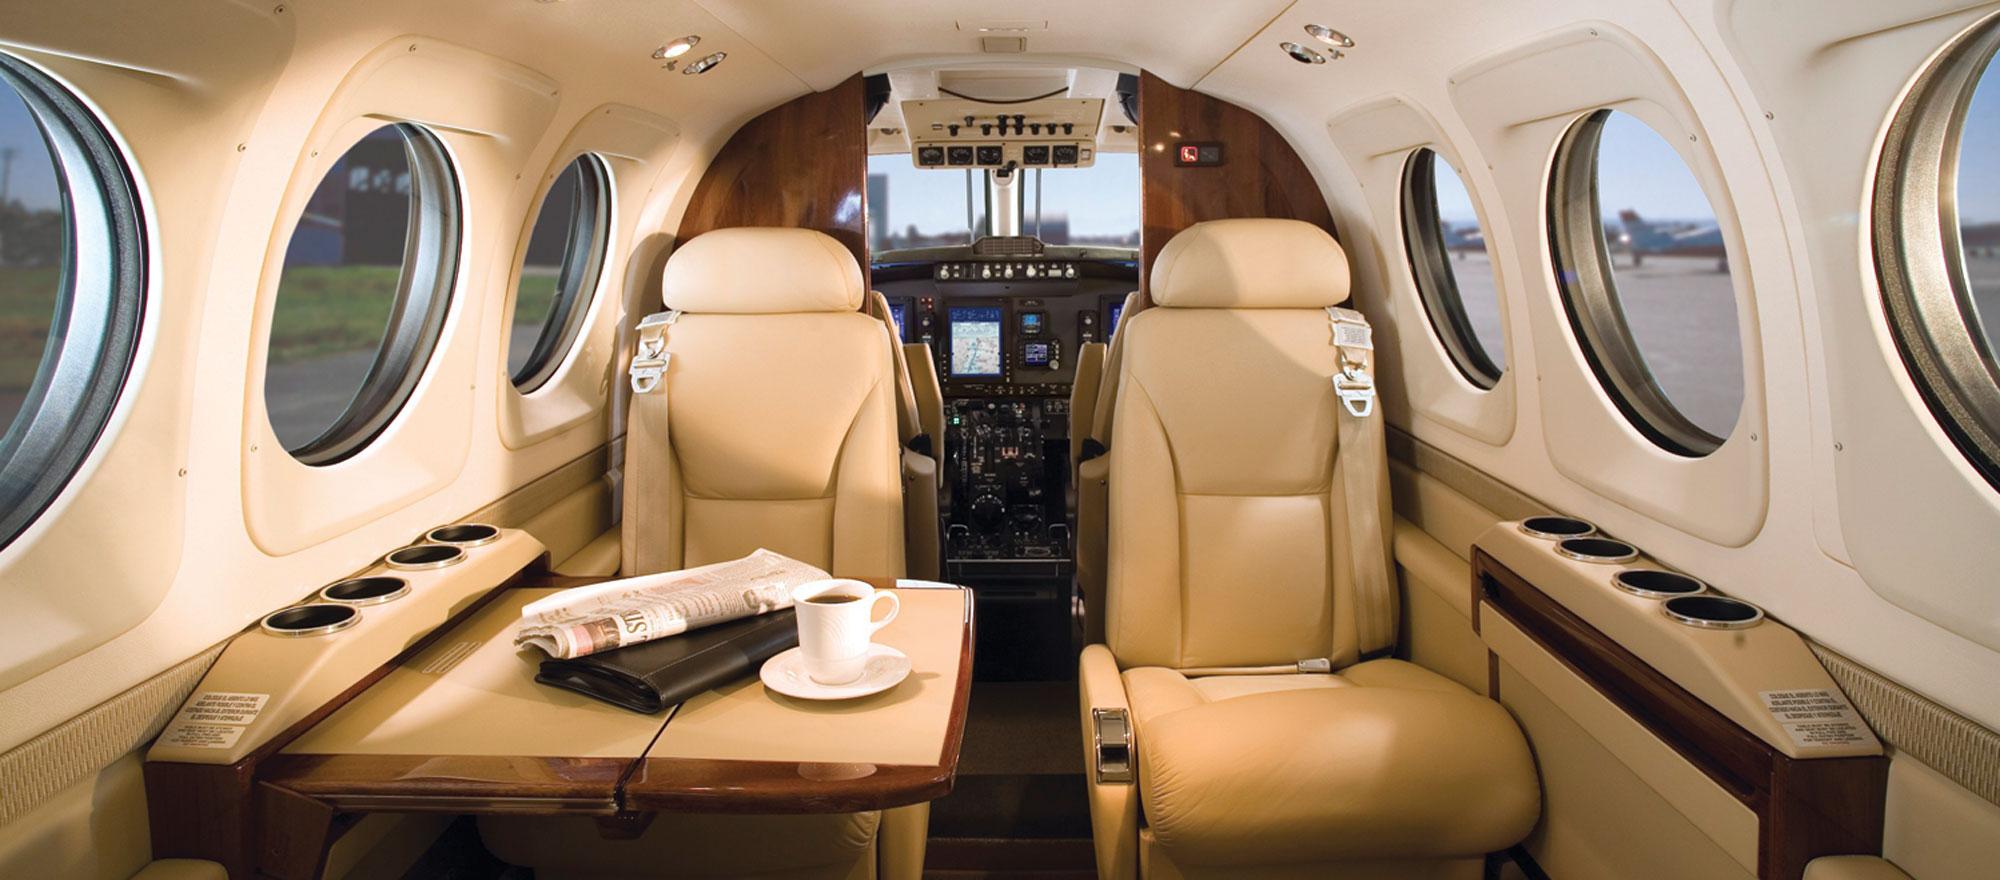 King Air C90GT interior